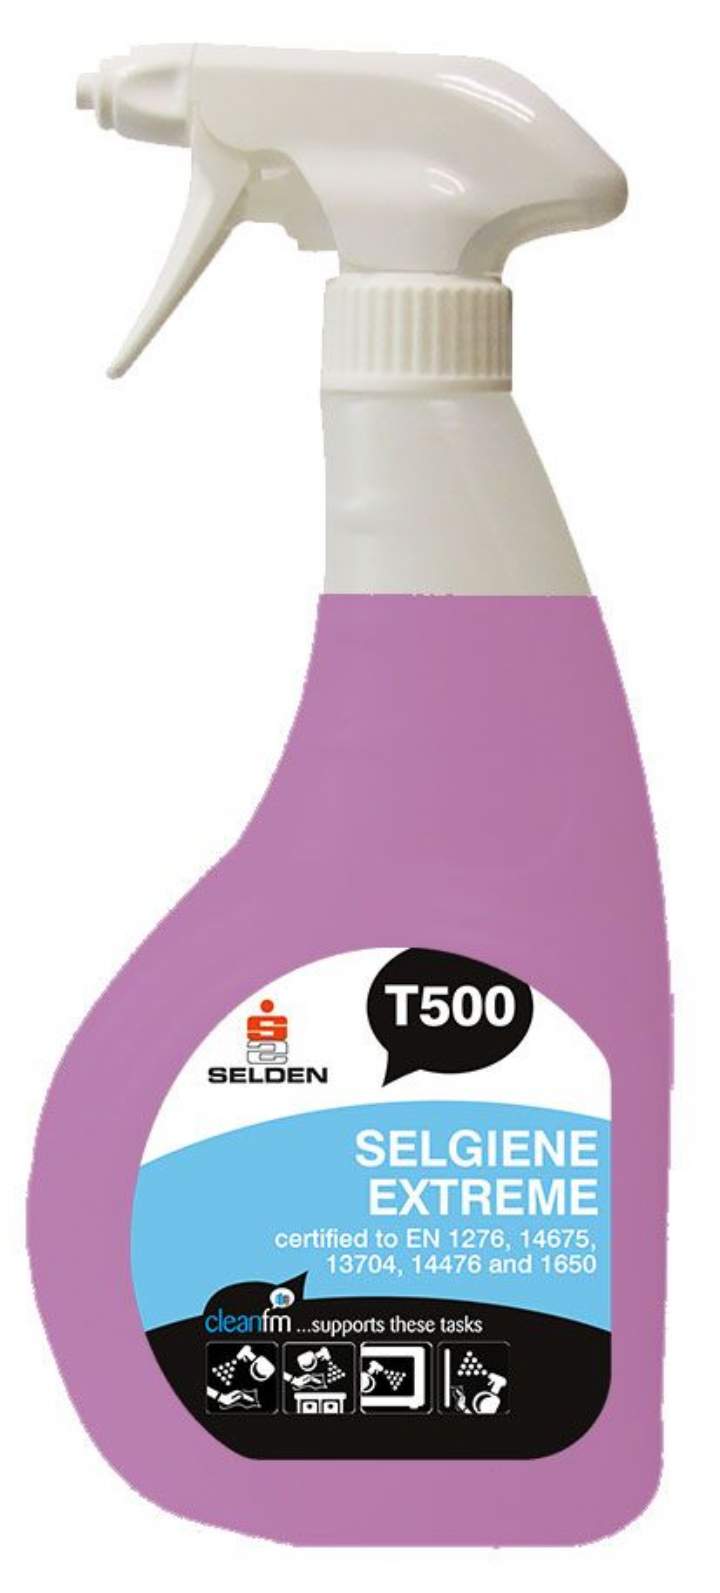 SELGIENE EXTREME CLEANER DISINFECTANT RTU 6x750ml